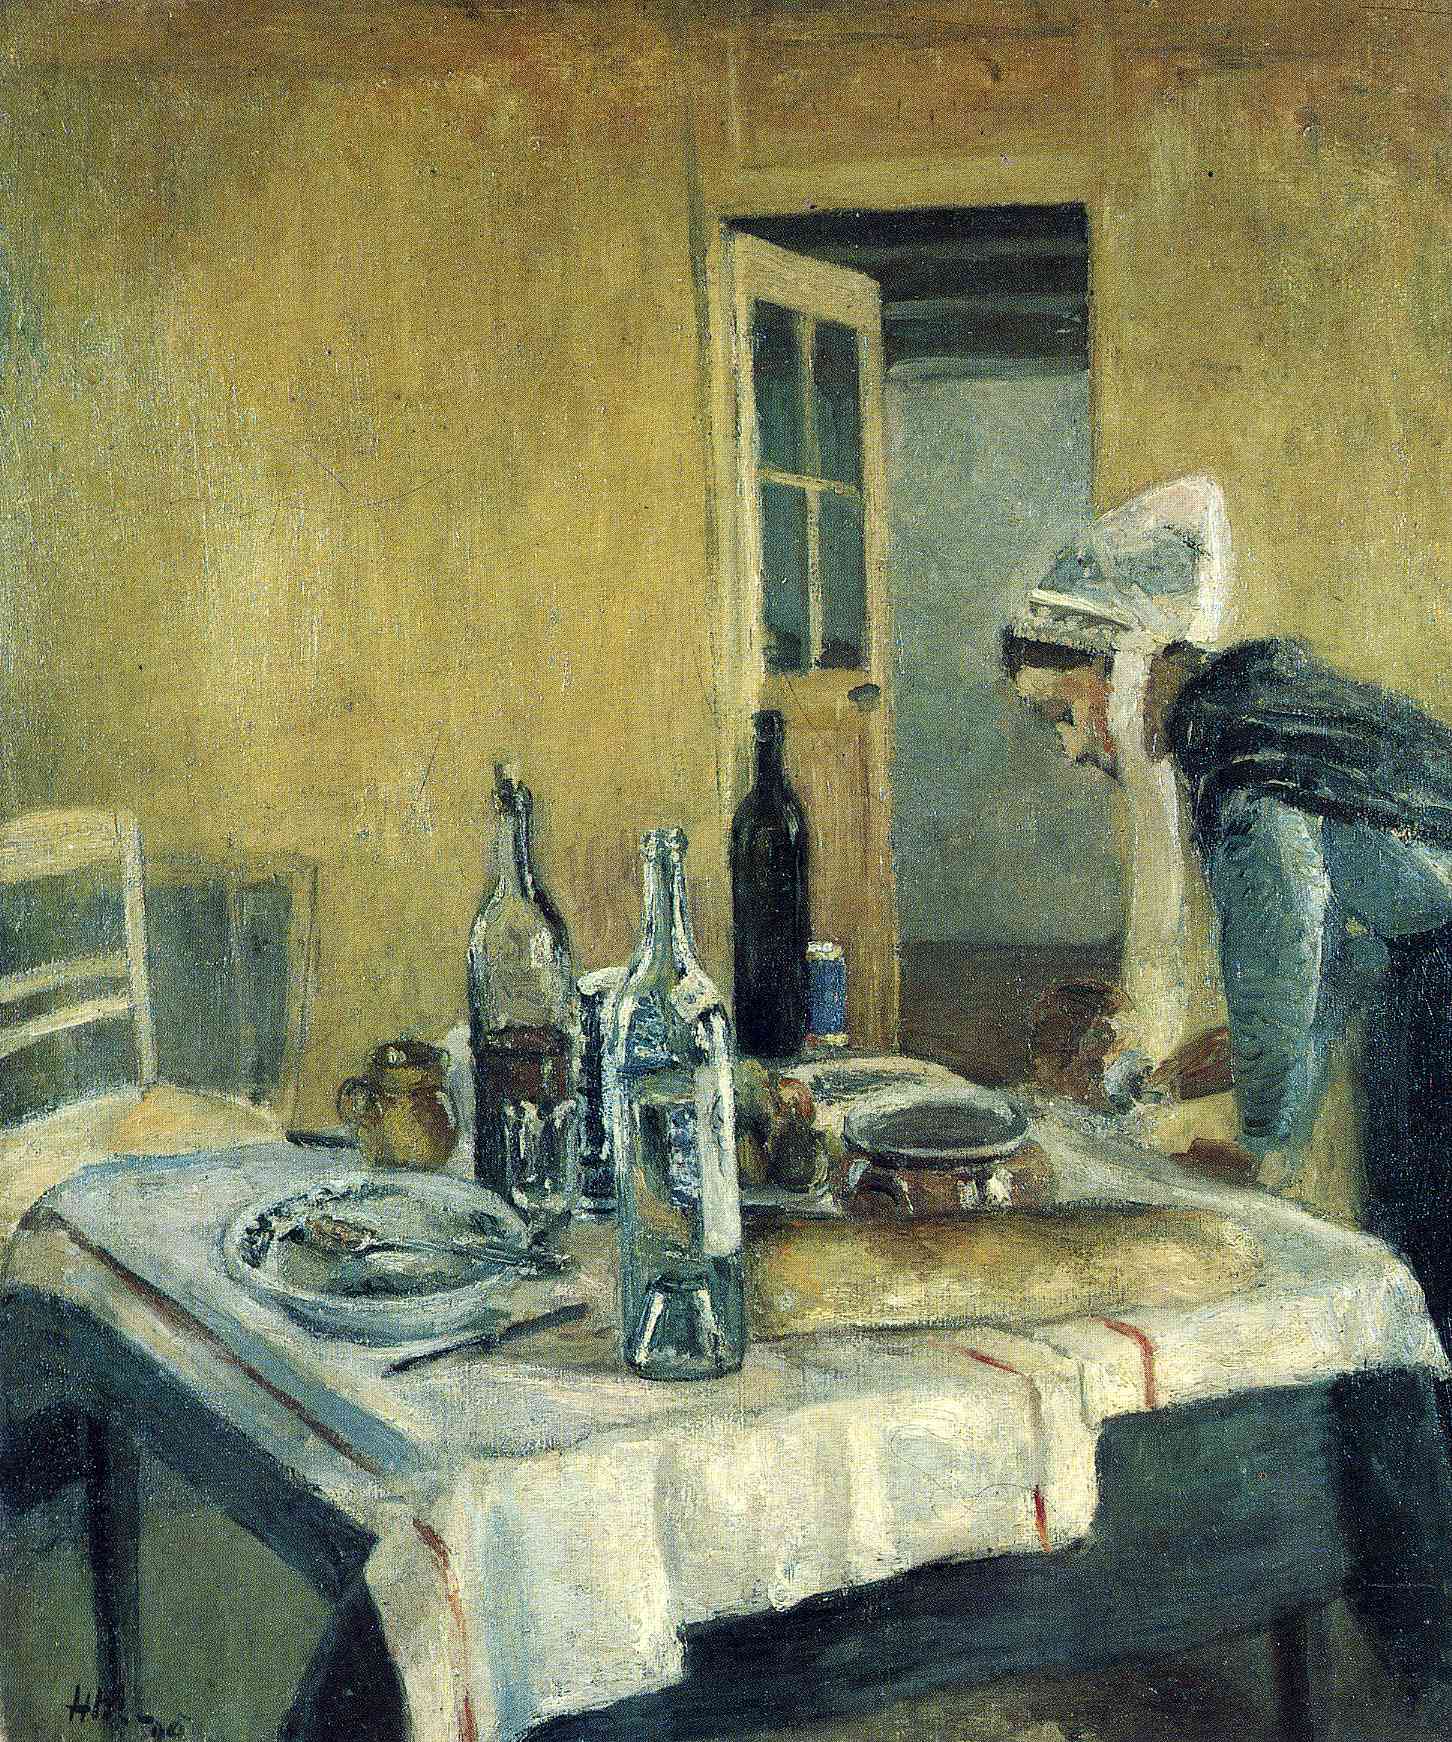 The Maid (1896).